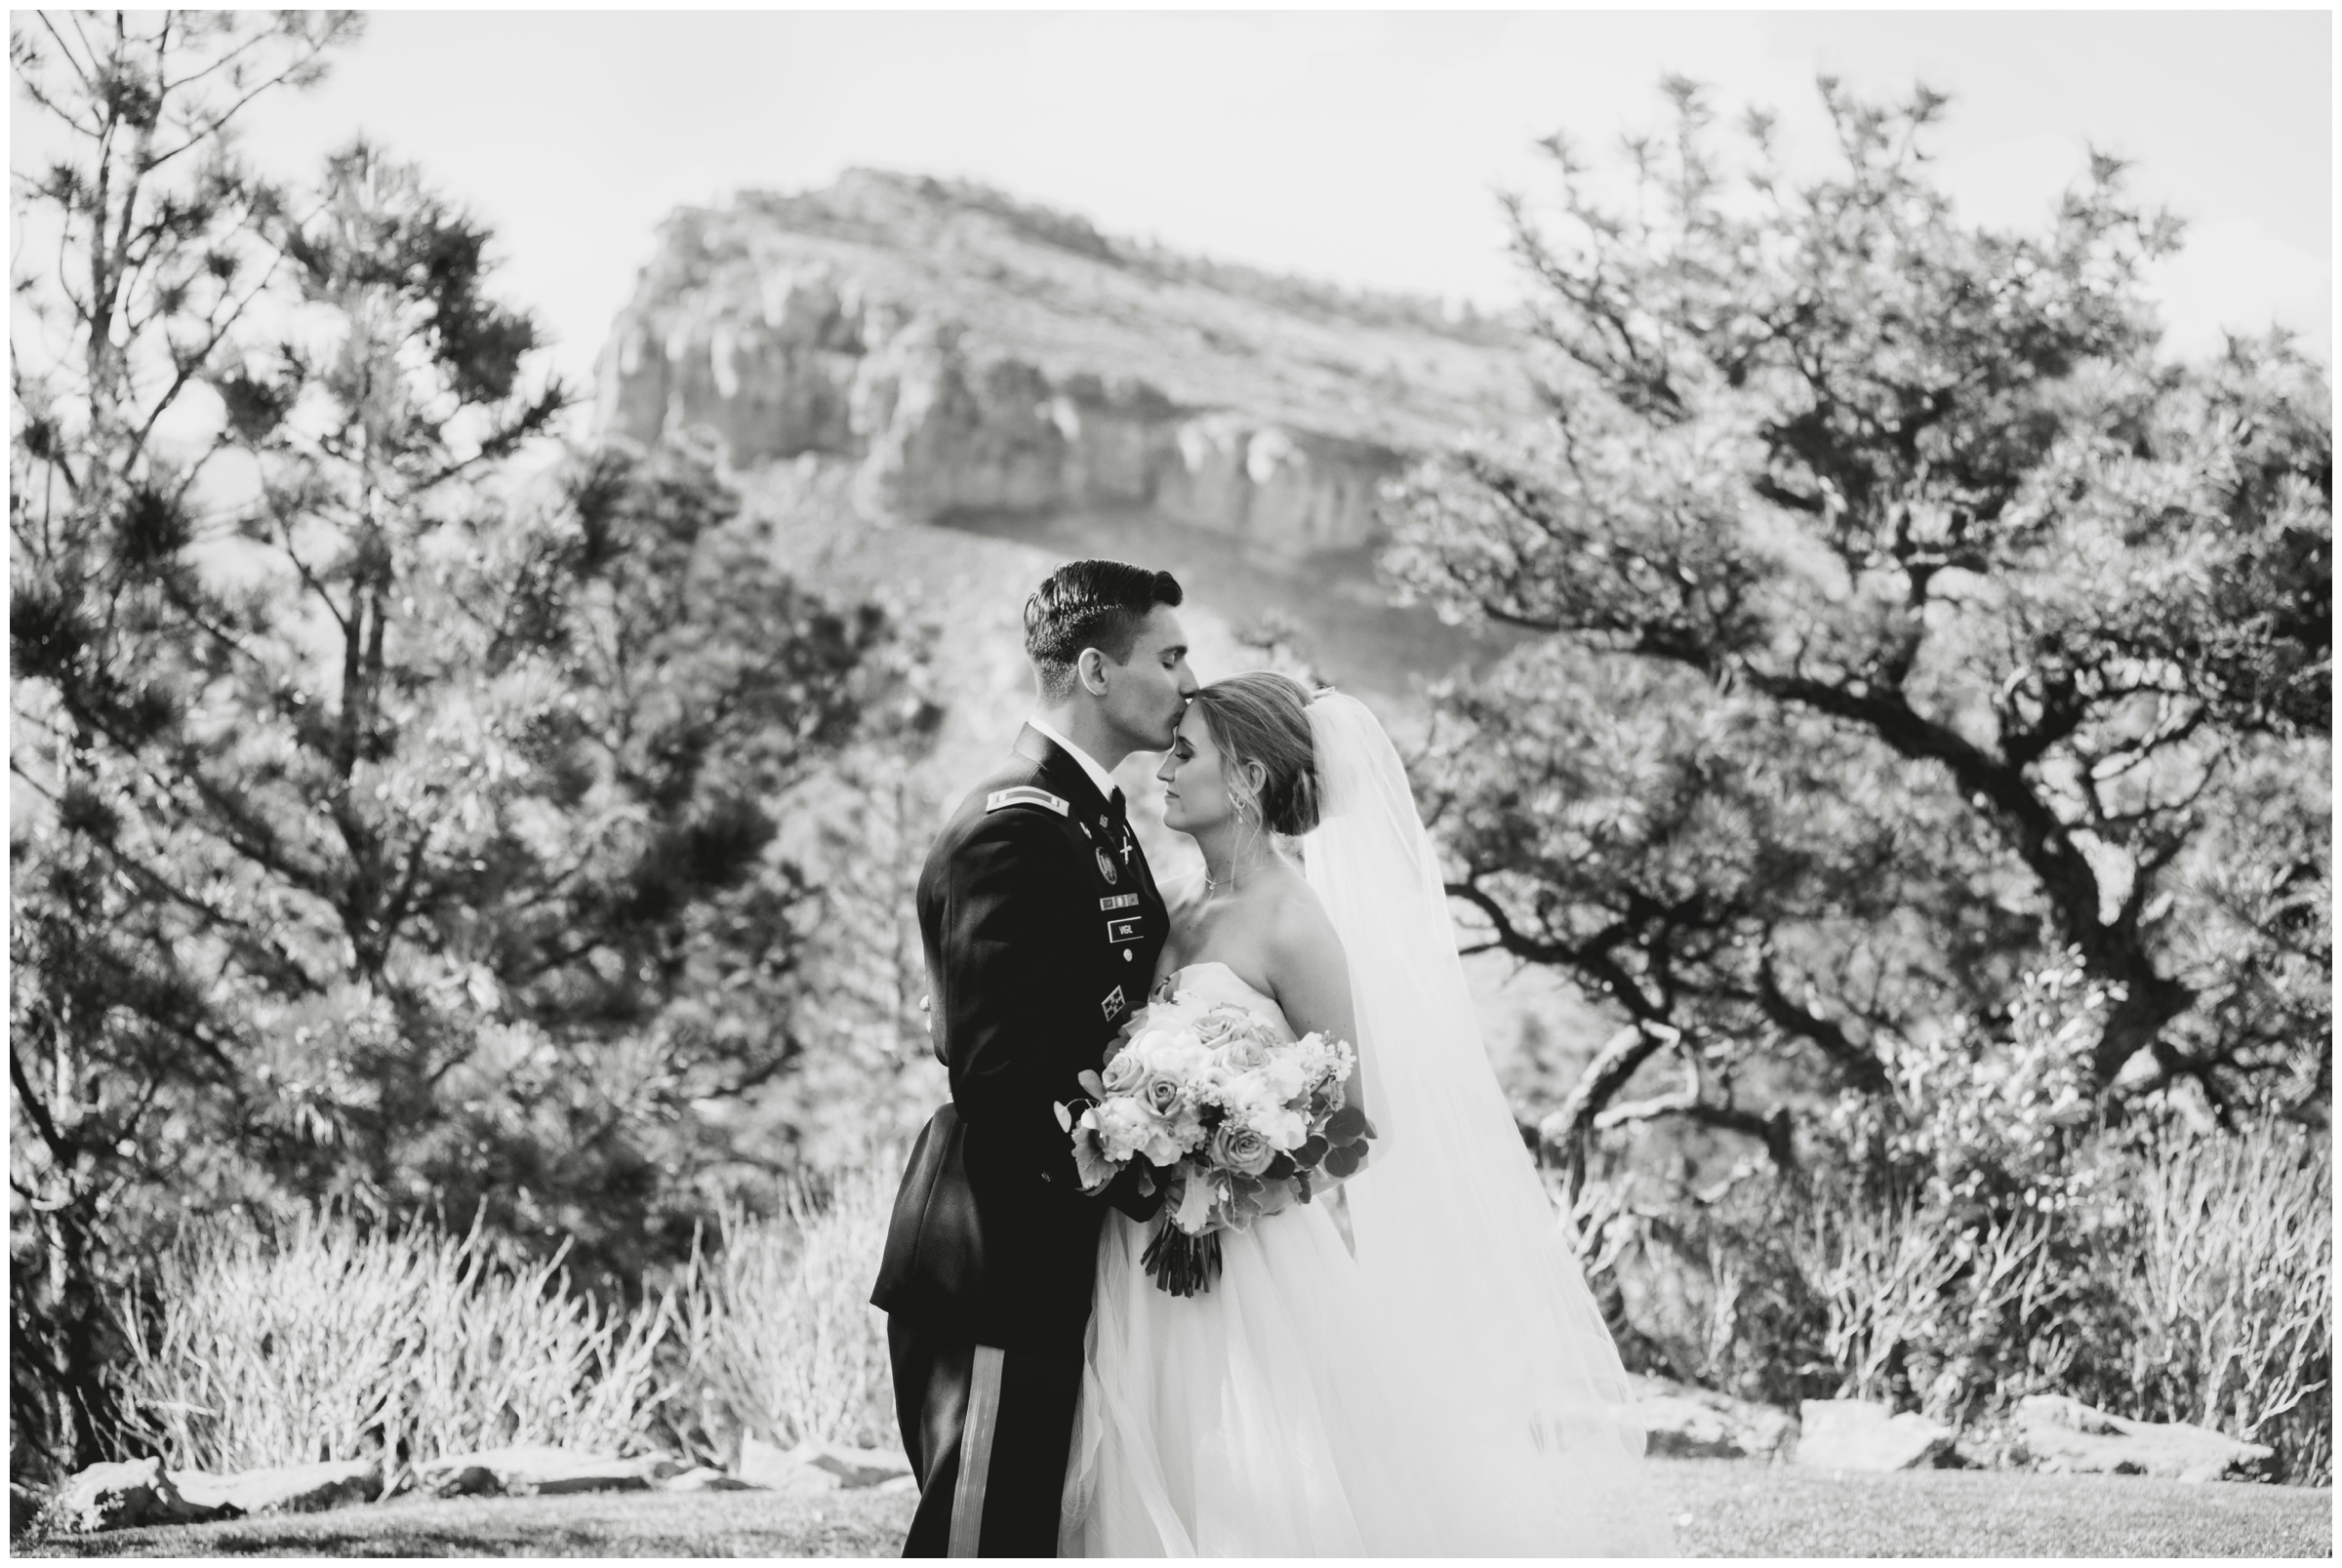 military groom kissing bride on forehead at Lyons Colorado wedding